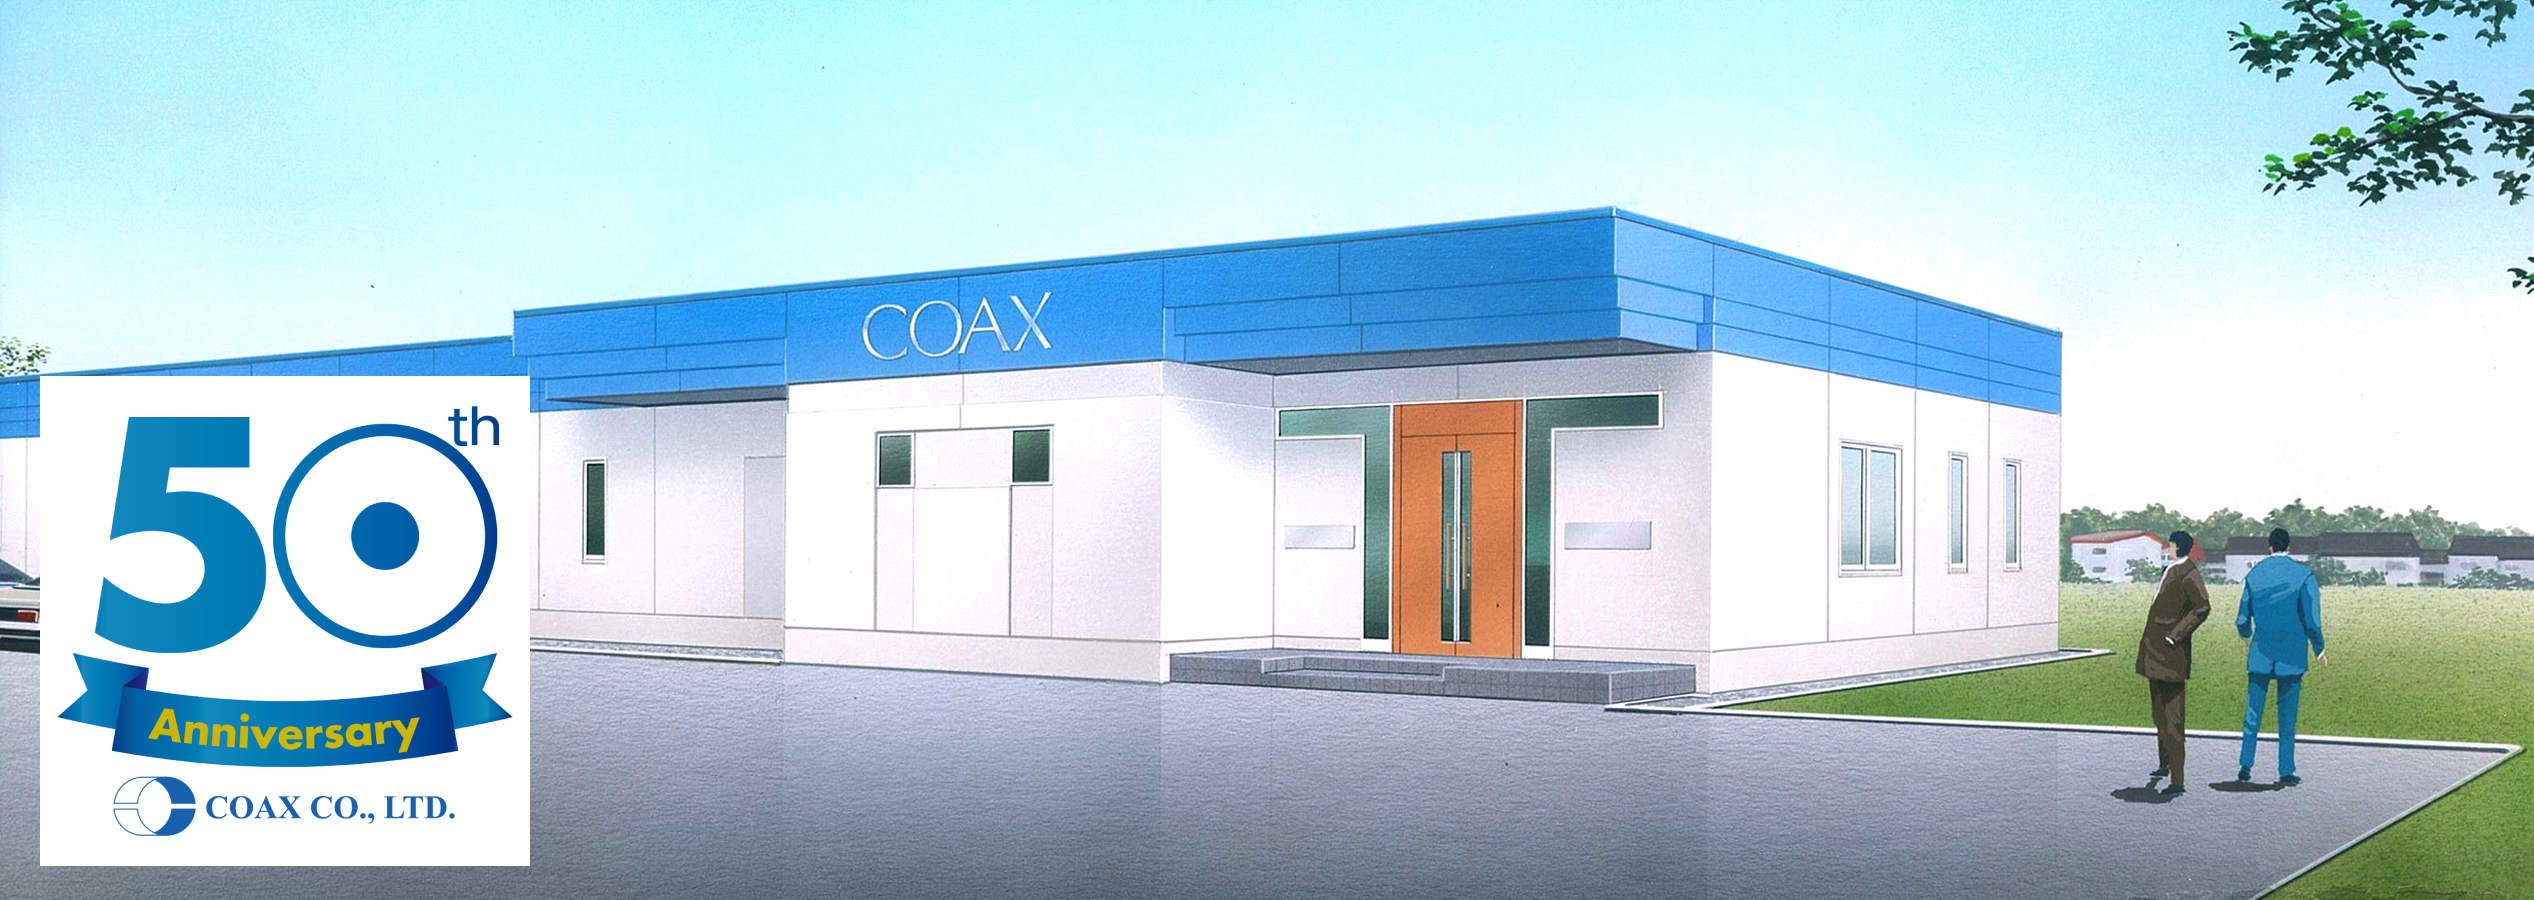 COAX CO., LTD. 50th anniversary